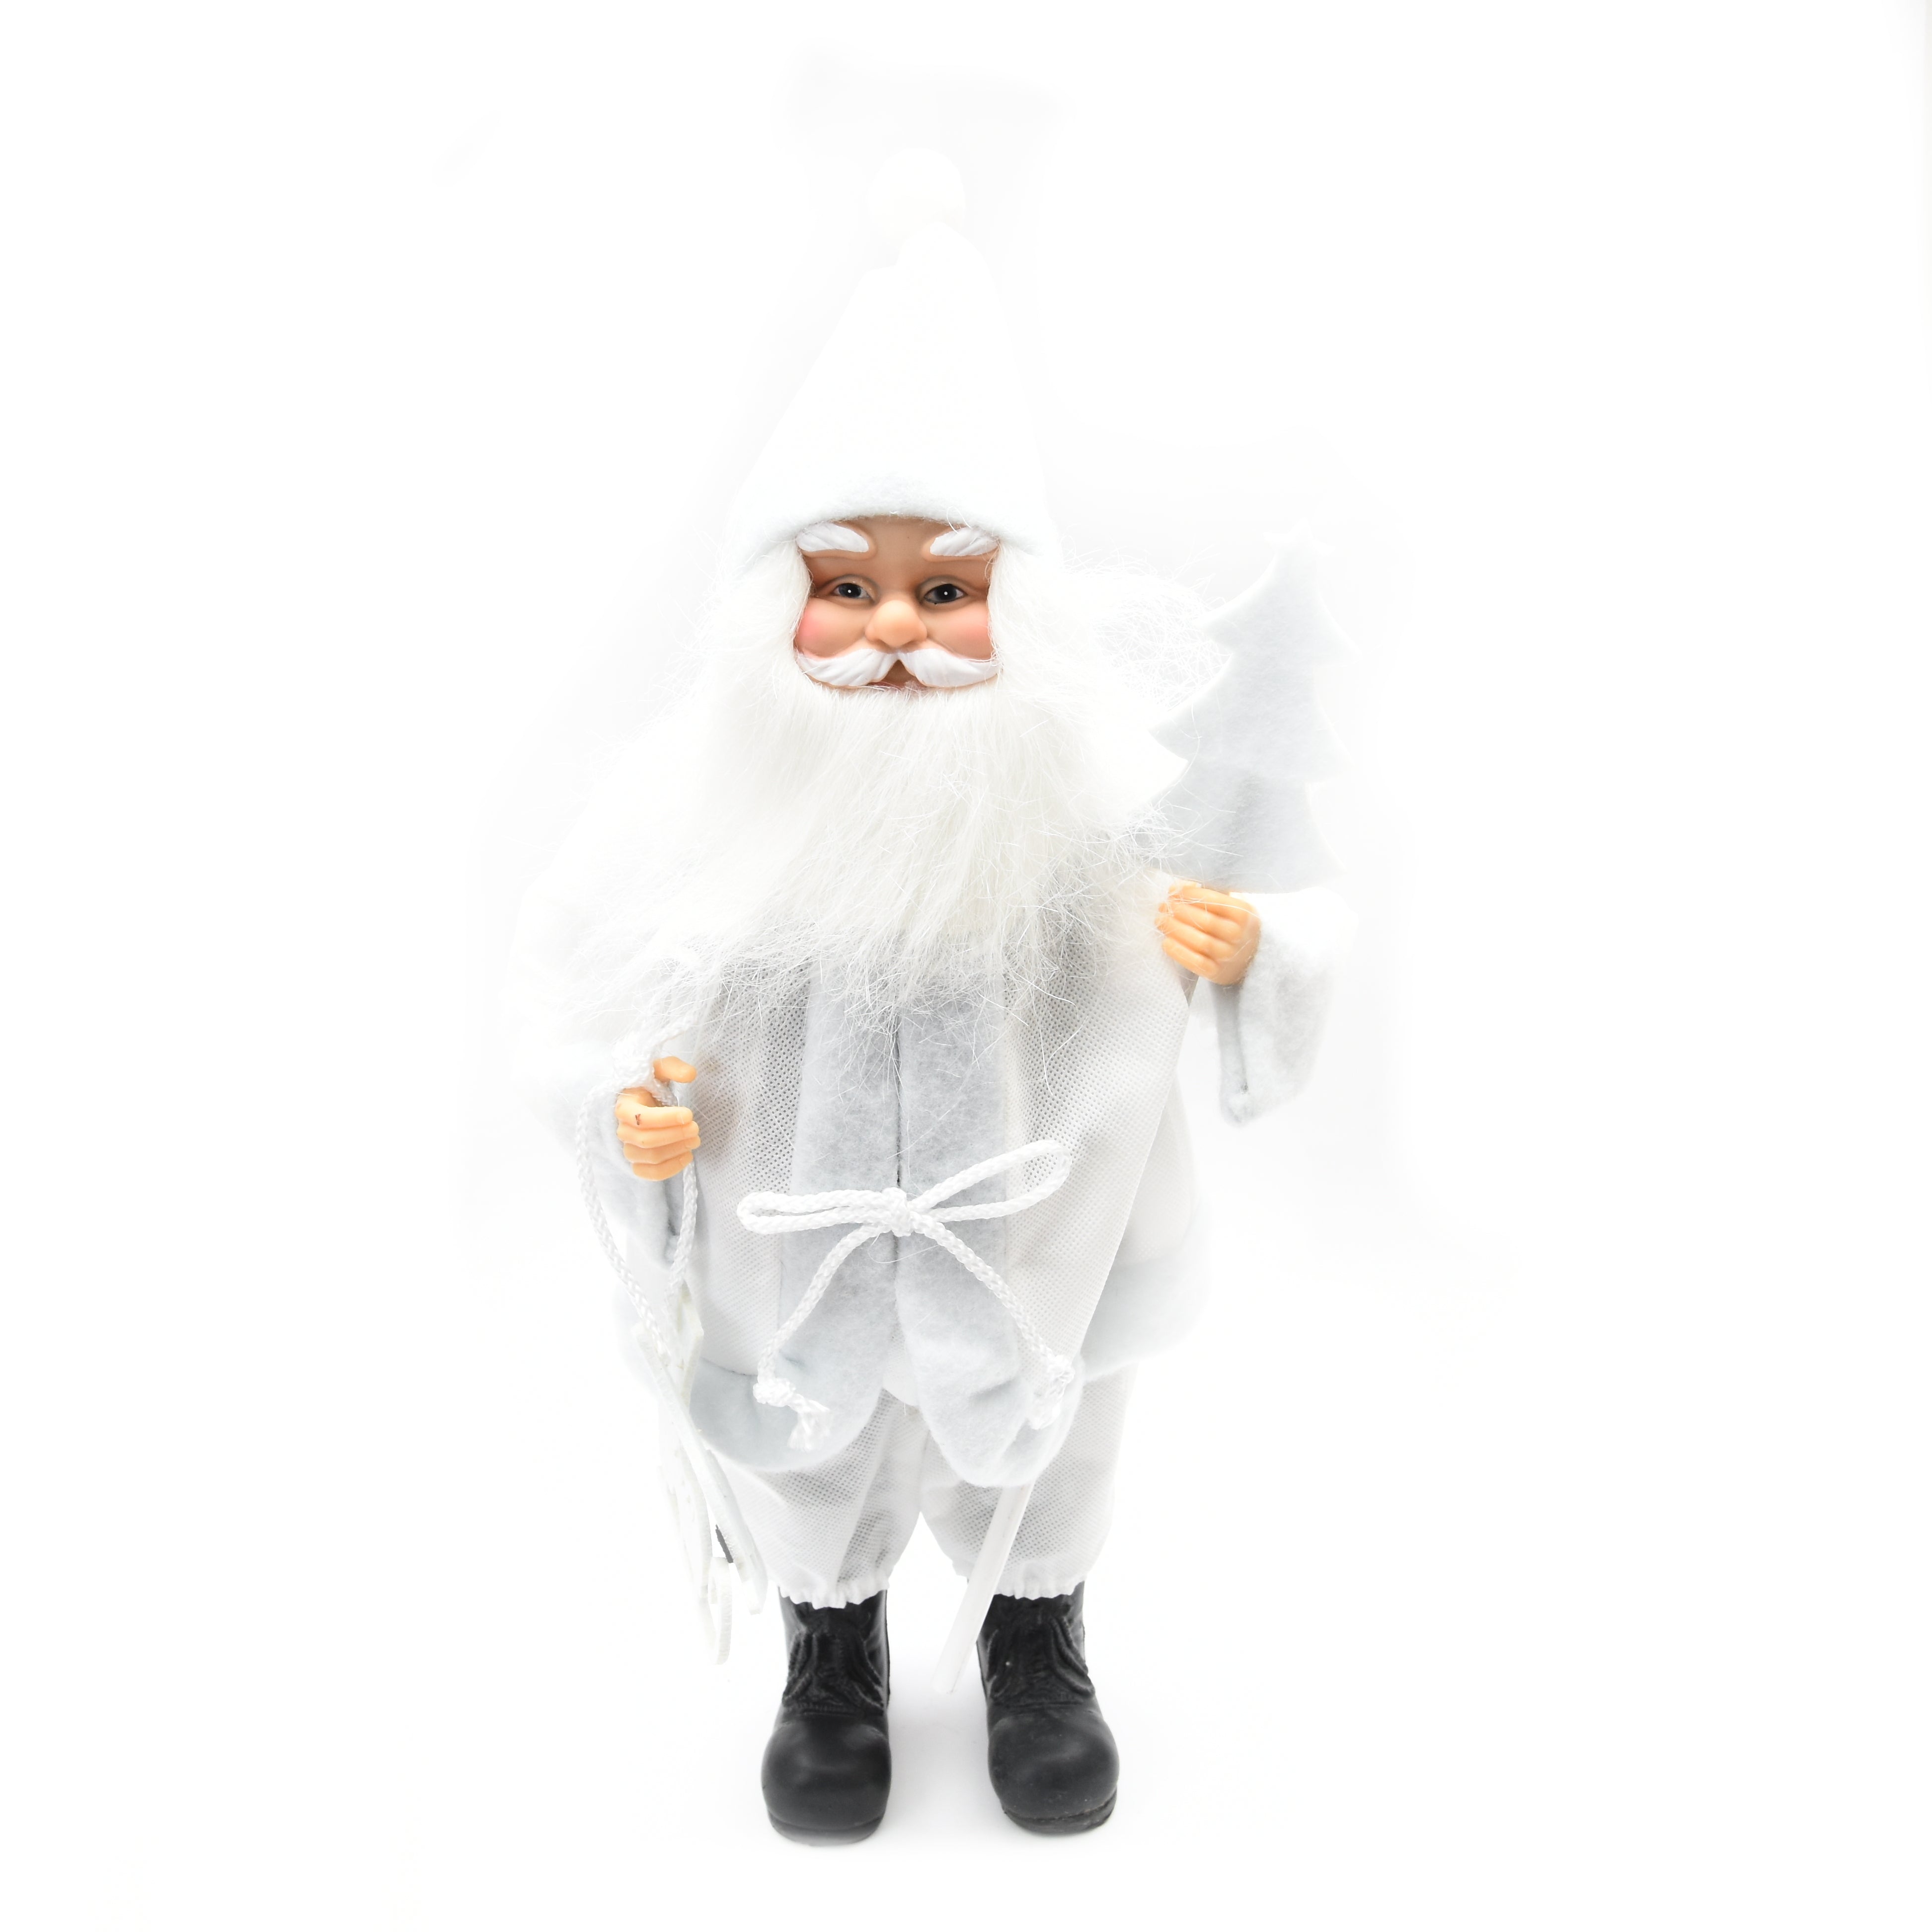 Christmas Decoration - Santa Clause Figurine, White, 45cm, 1pc